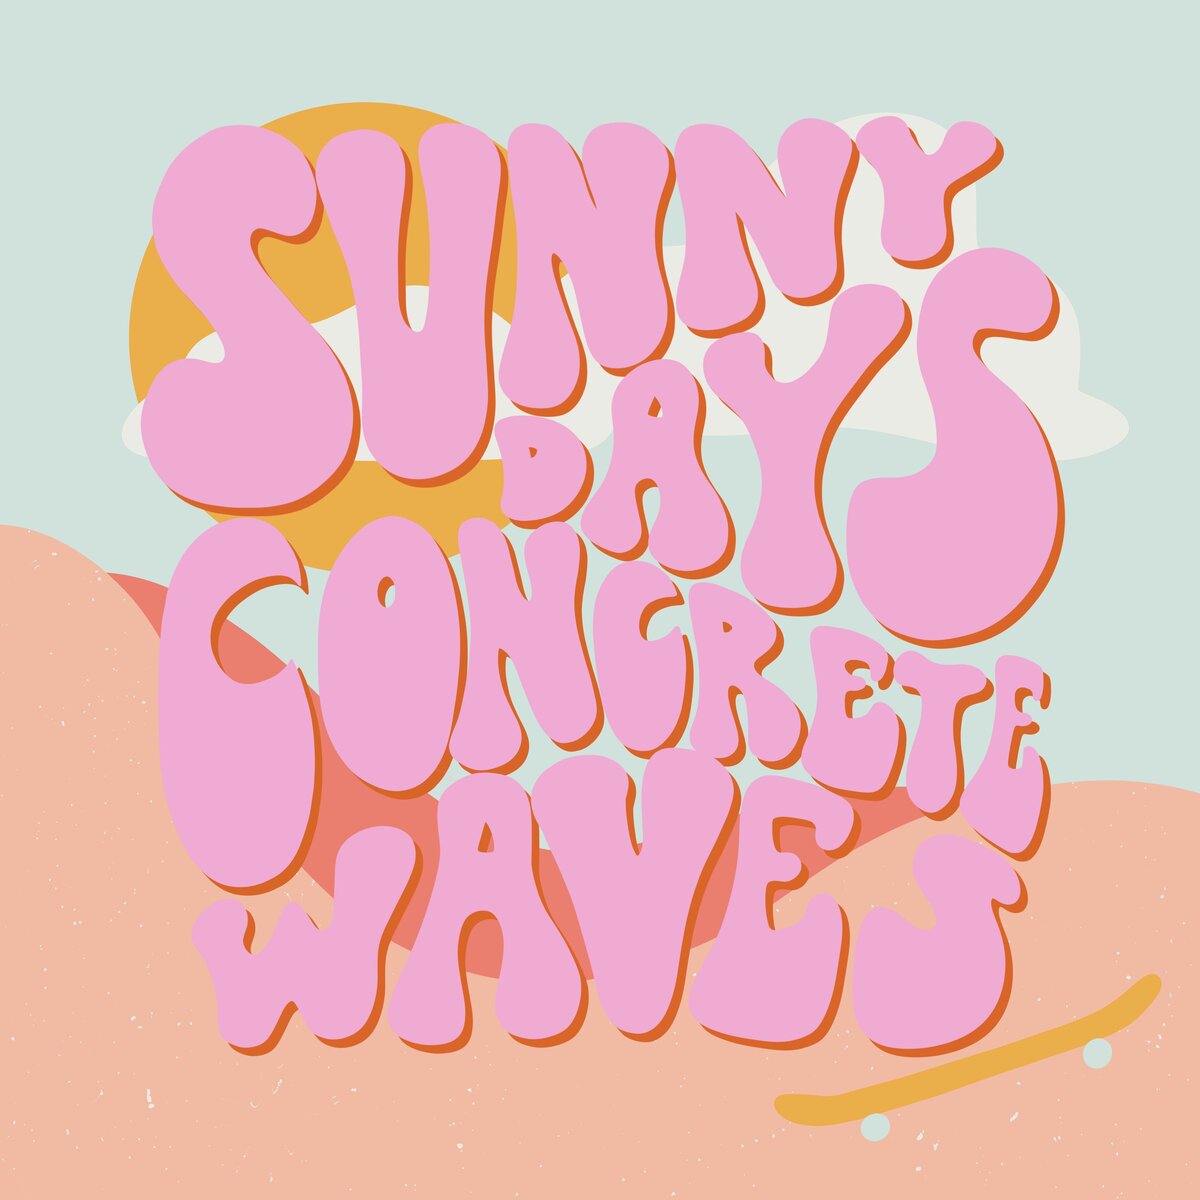 Sunny-Days_Concrete_Waves